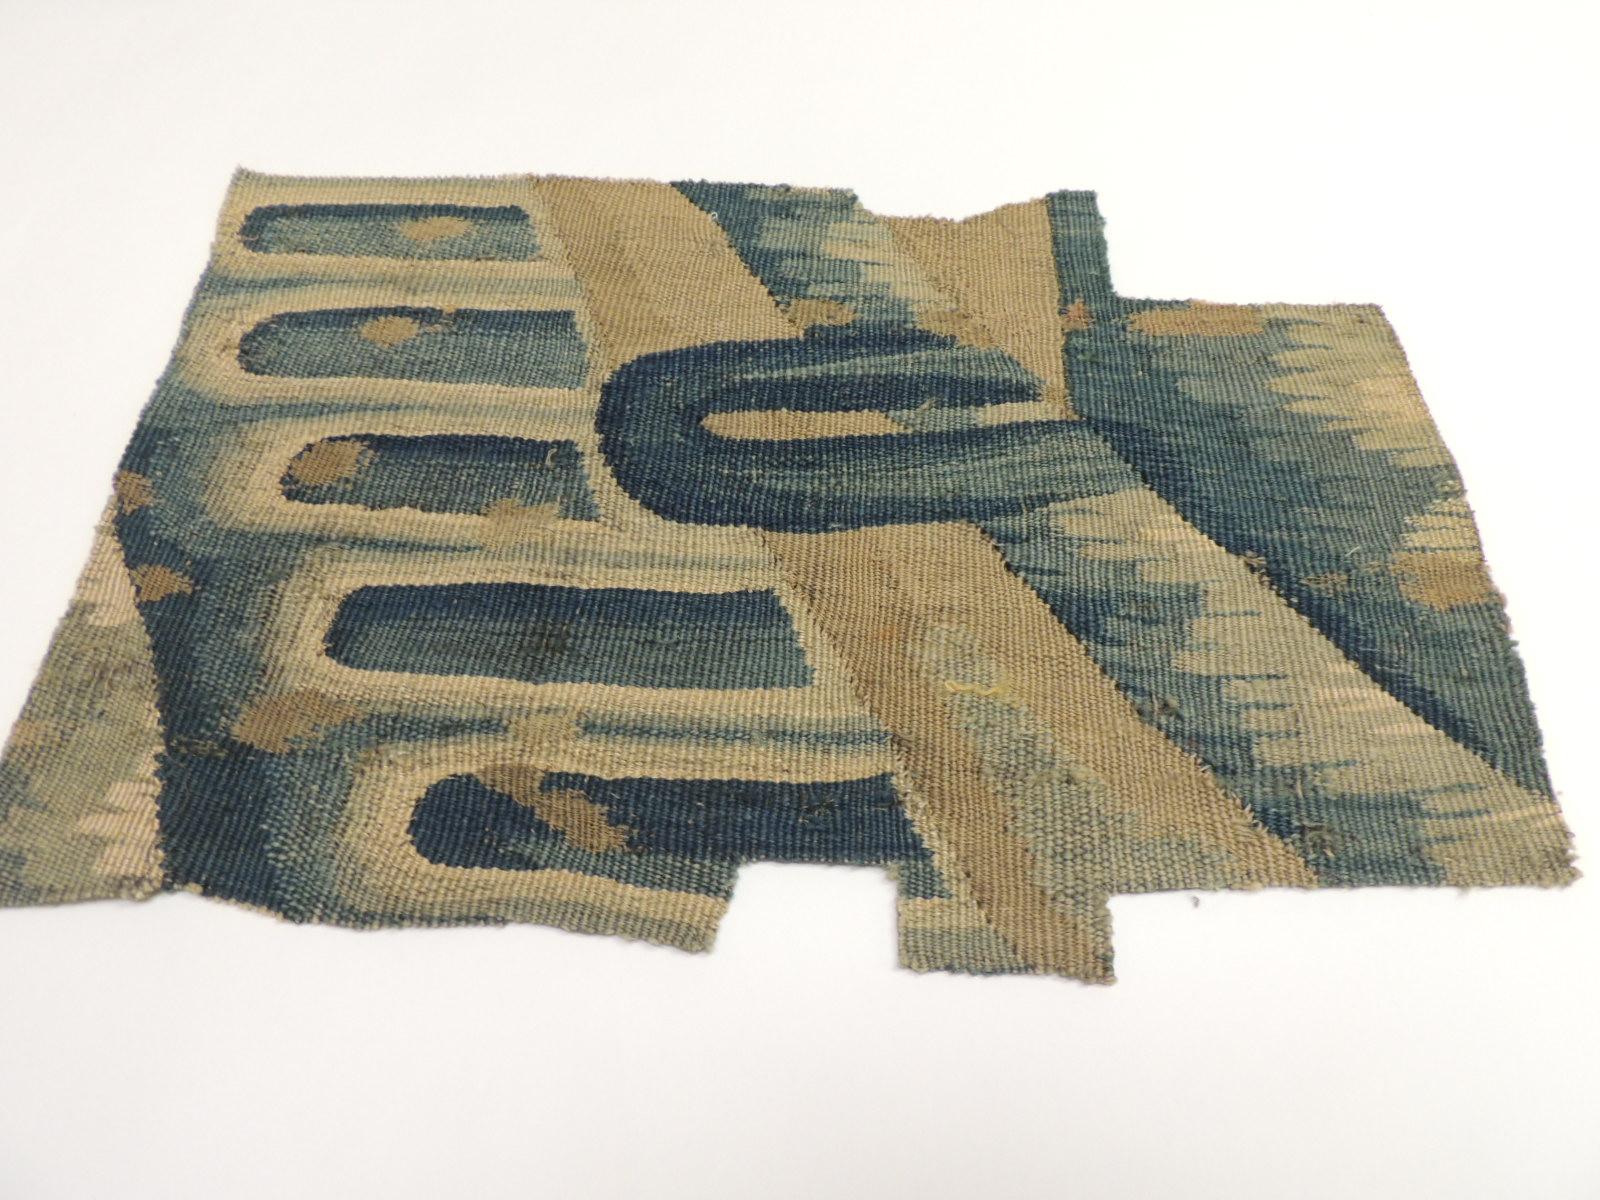 Regency 19th Century Green and Gold Verdure Tapestry Fragment 